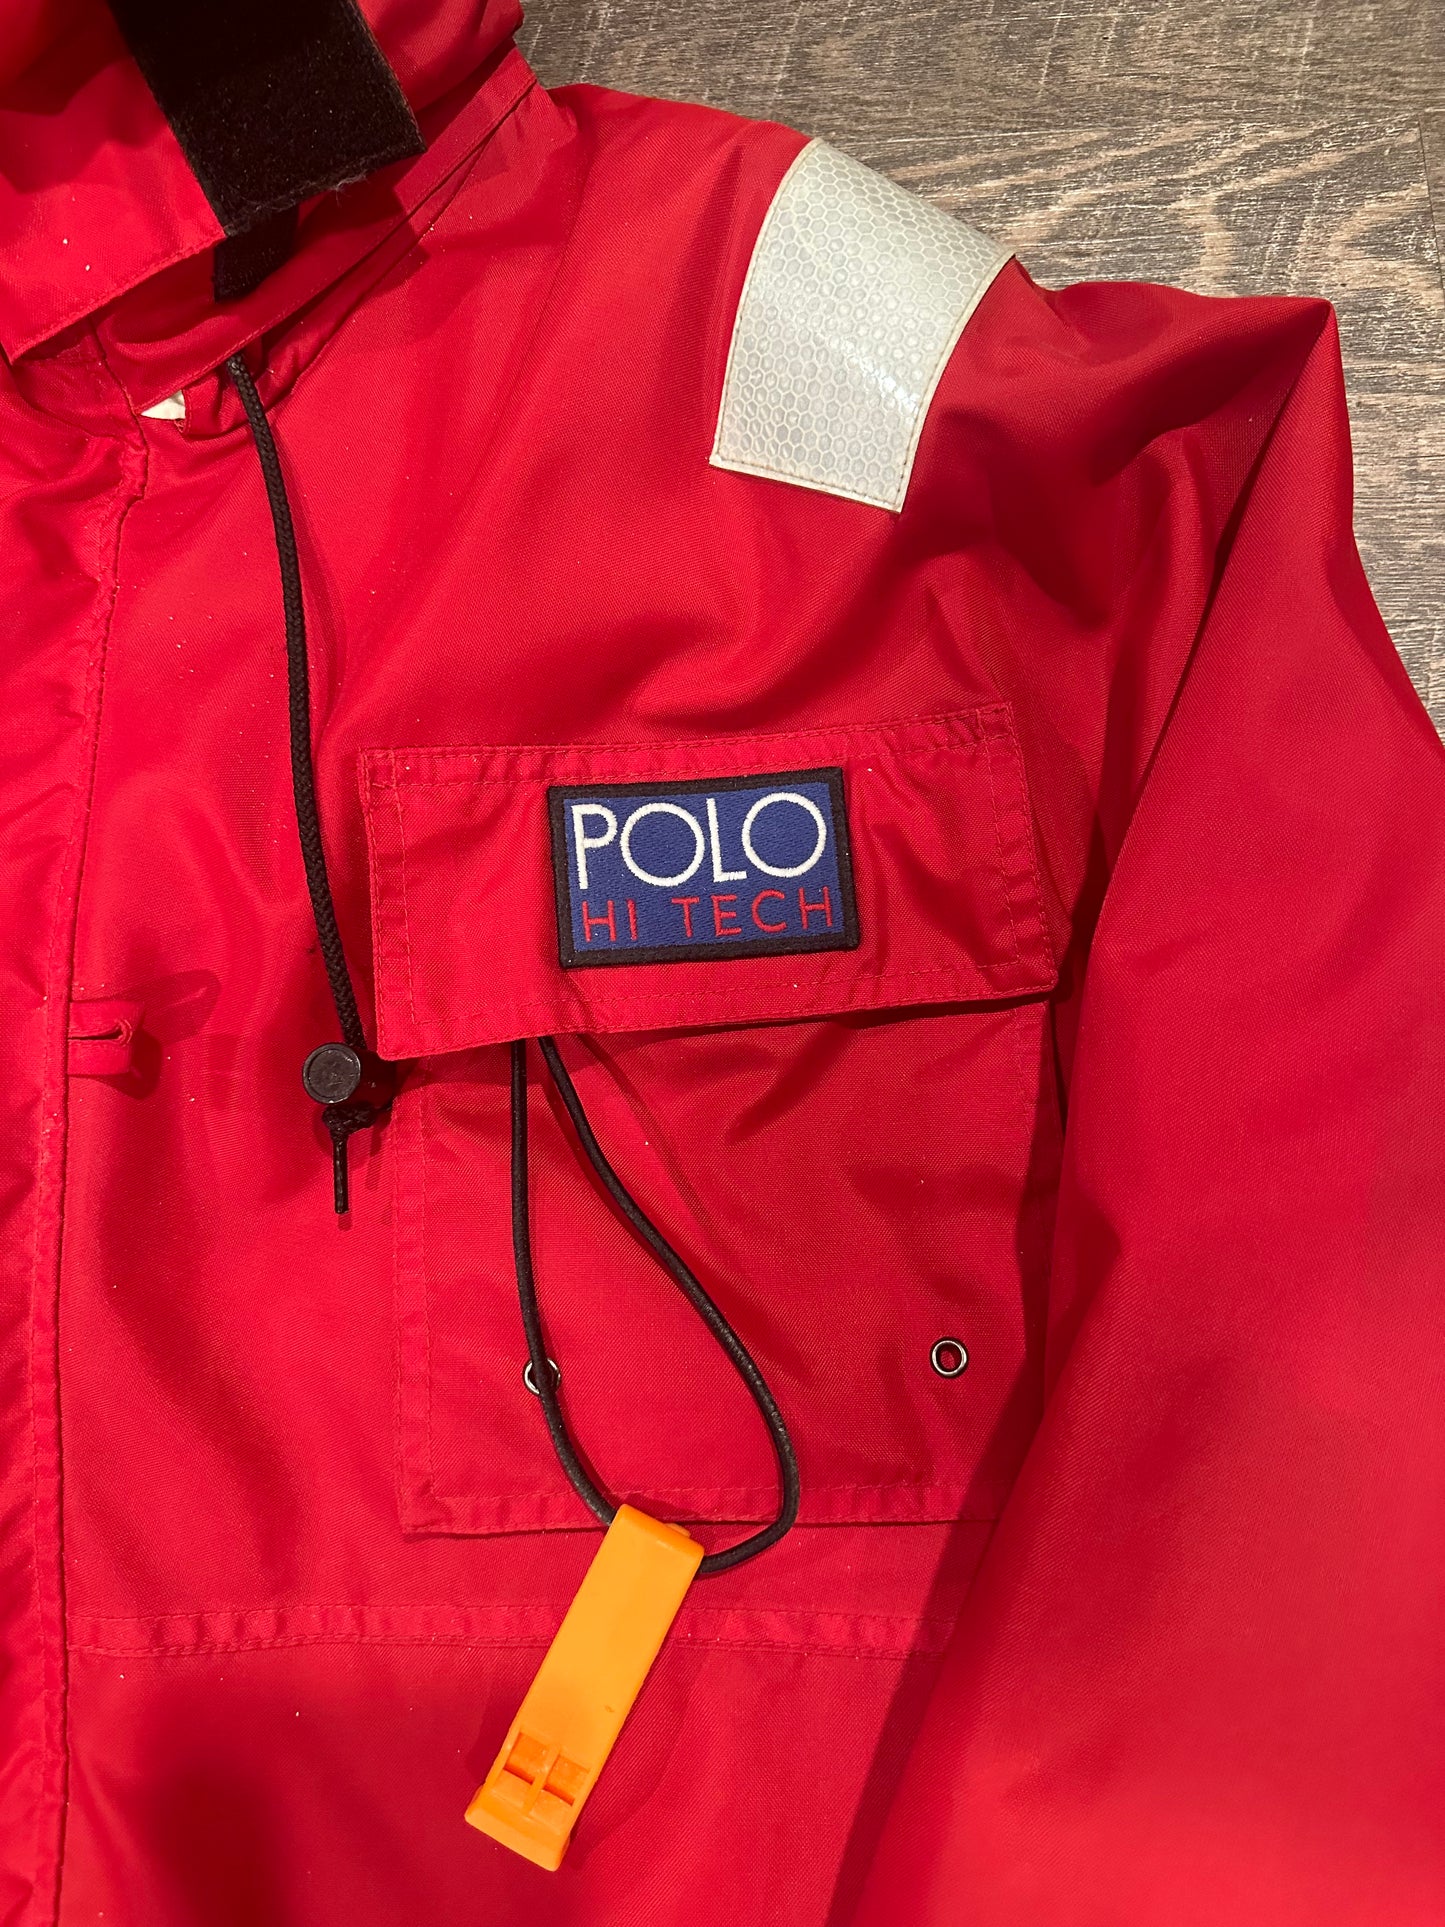 Original 90’s Polo Ralph Lauren HI-TECH jacket